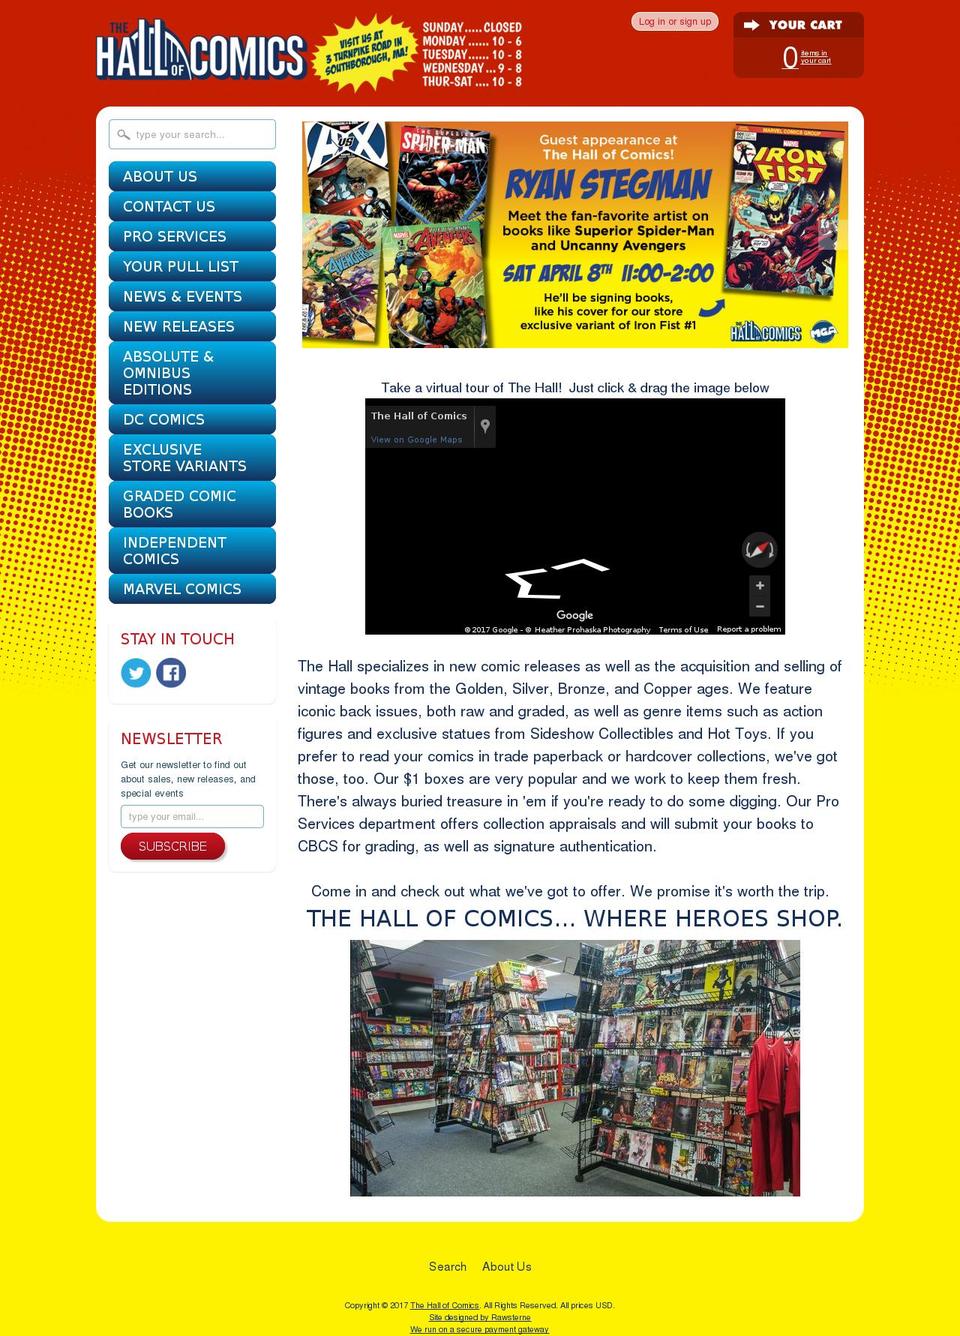 thehallofcomics.com shopify website screenshot